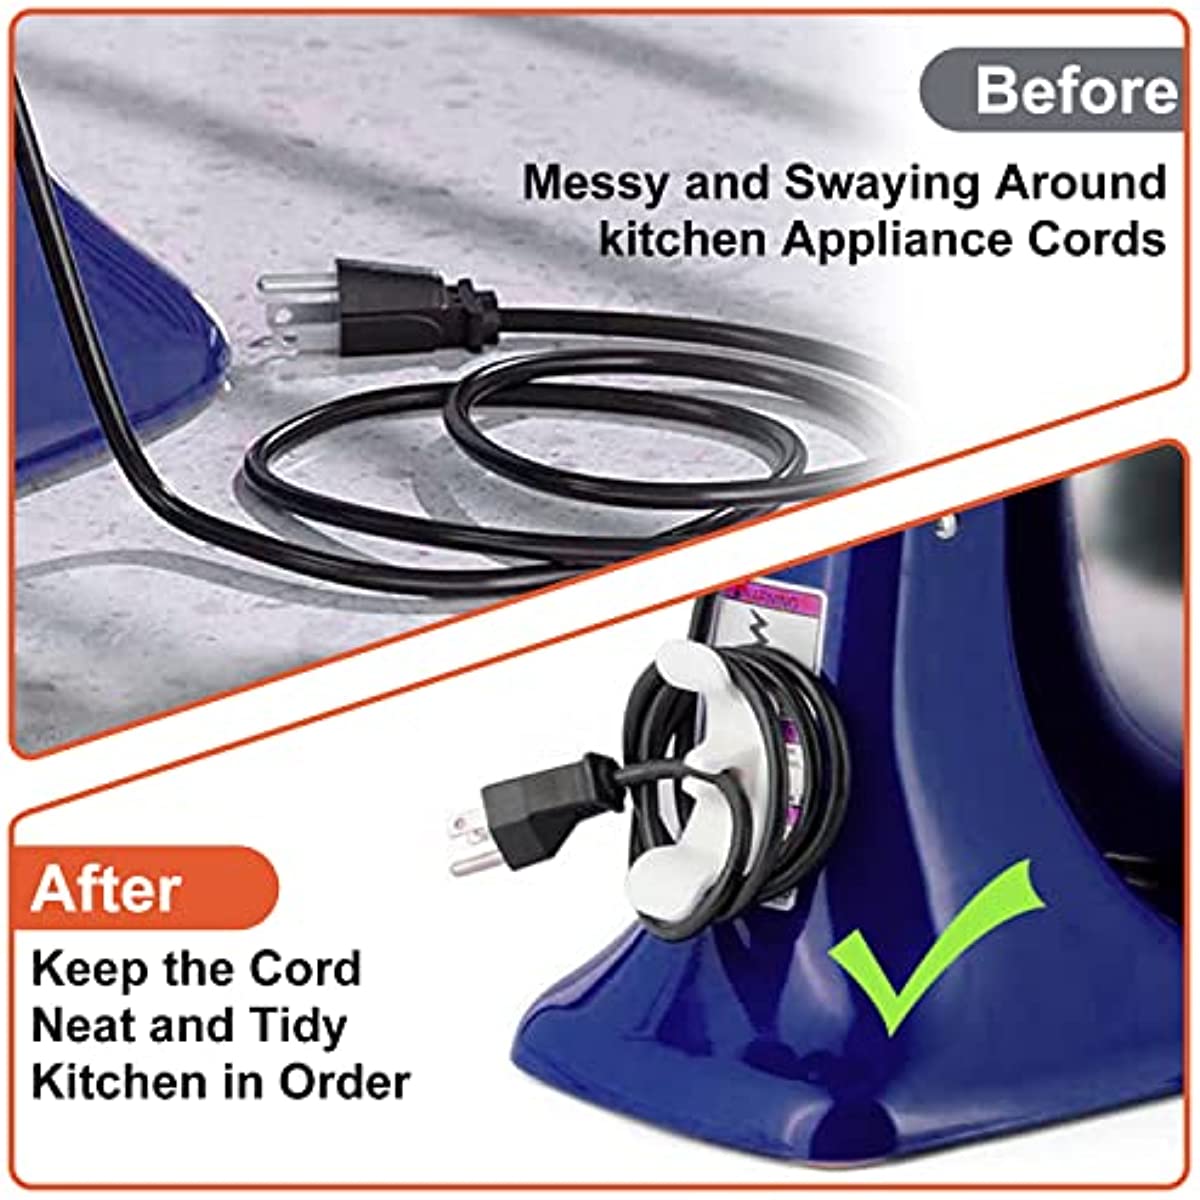 Cord Organizer For Appliances Cord Keeper Appliance Cord - Temu